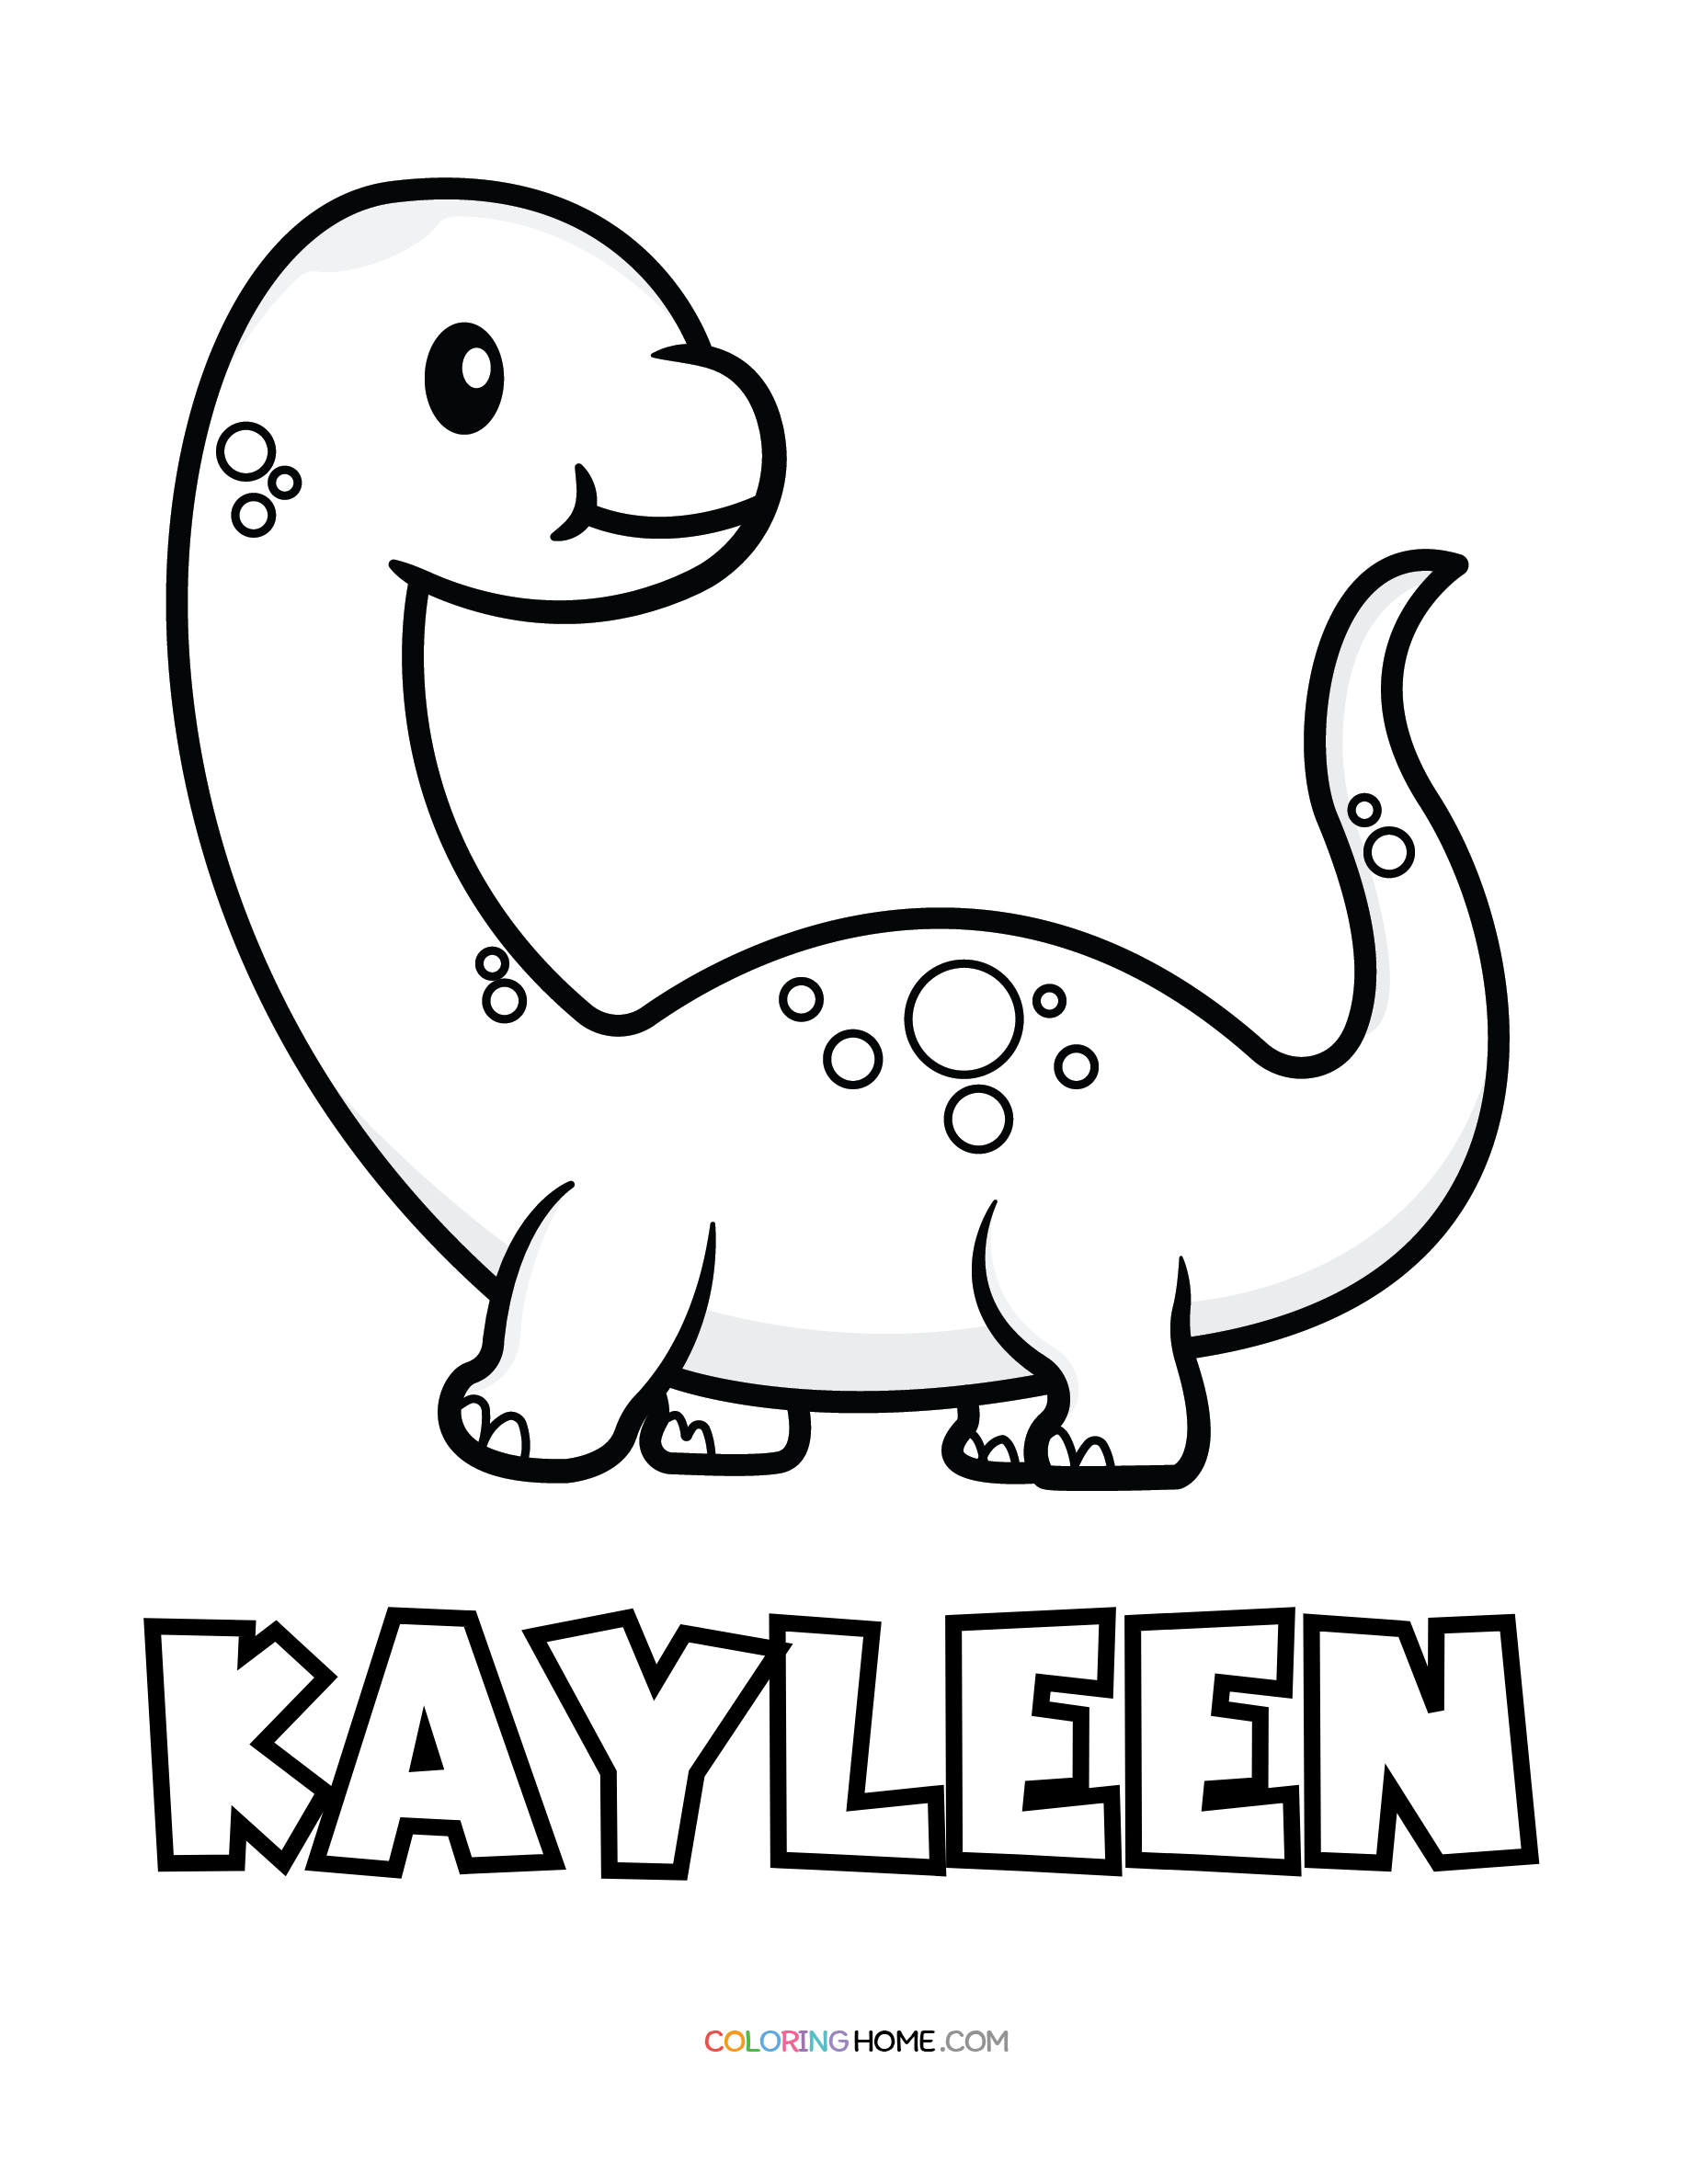 Kayleen dinosaur coloring page